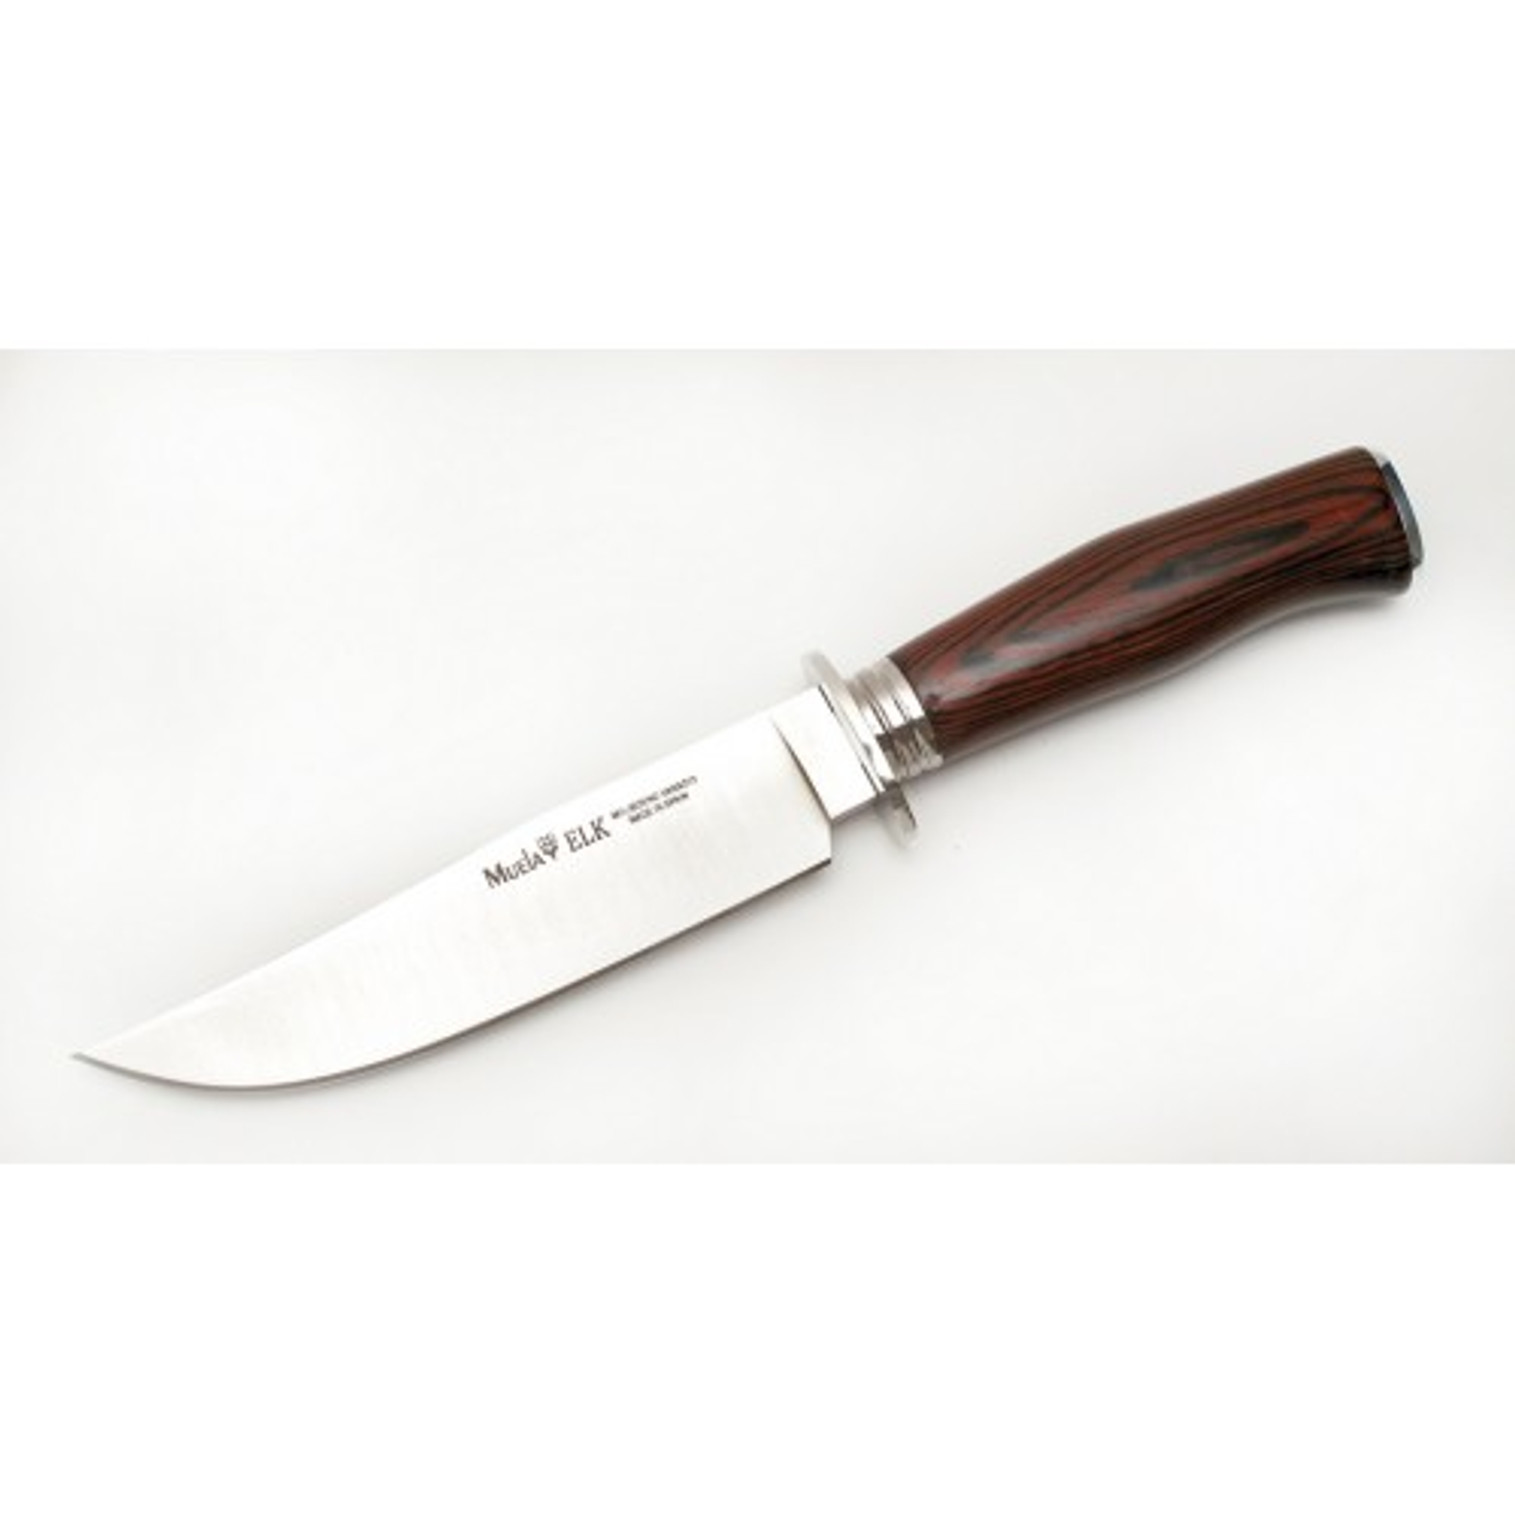 MUELA ELK-14R.I, X50CrMoV15, 5-1/2" Fixed Blade Hunting Knife, Coral Pakkawood Handle